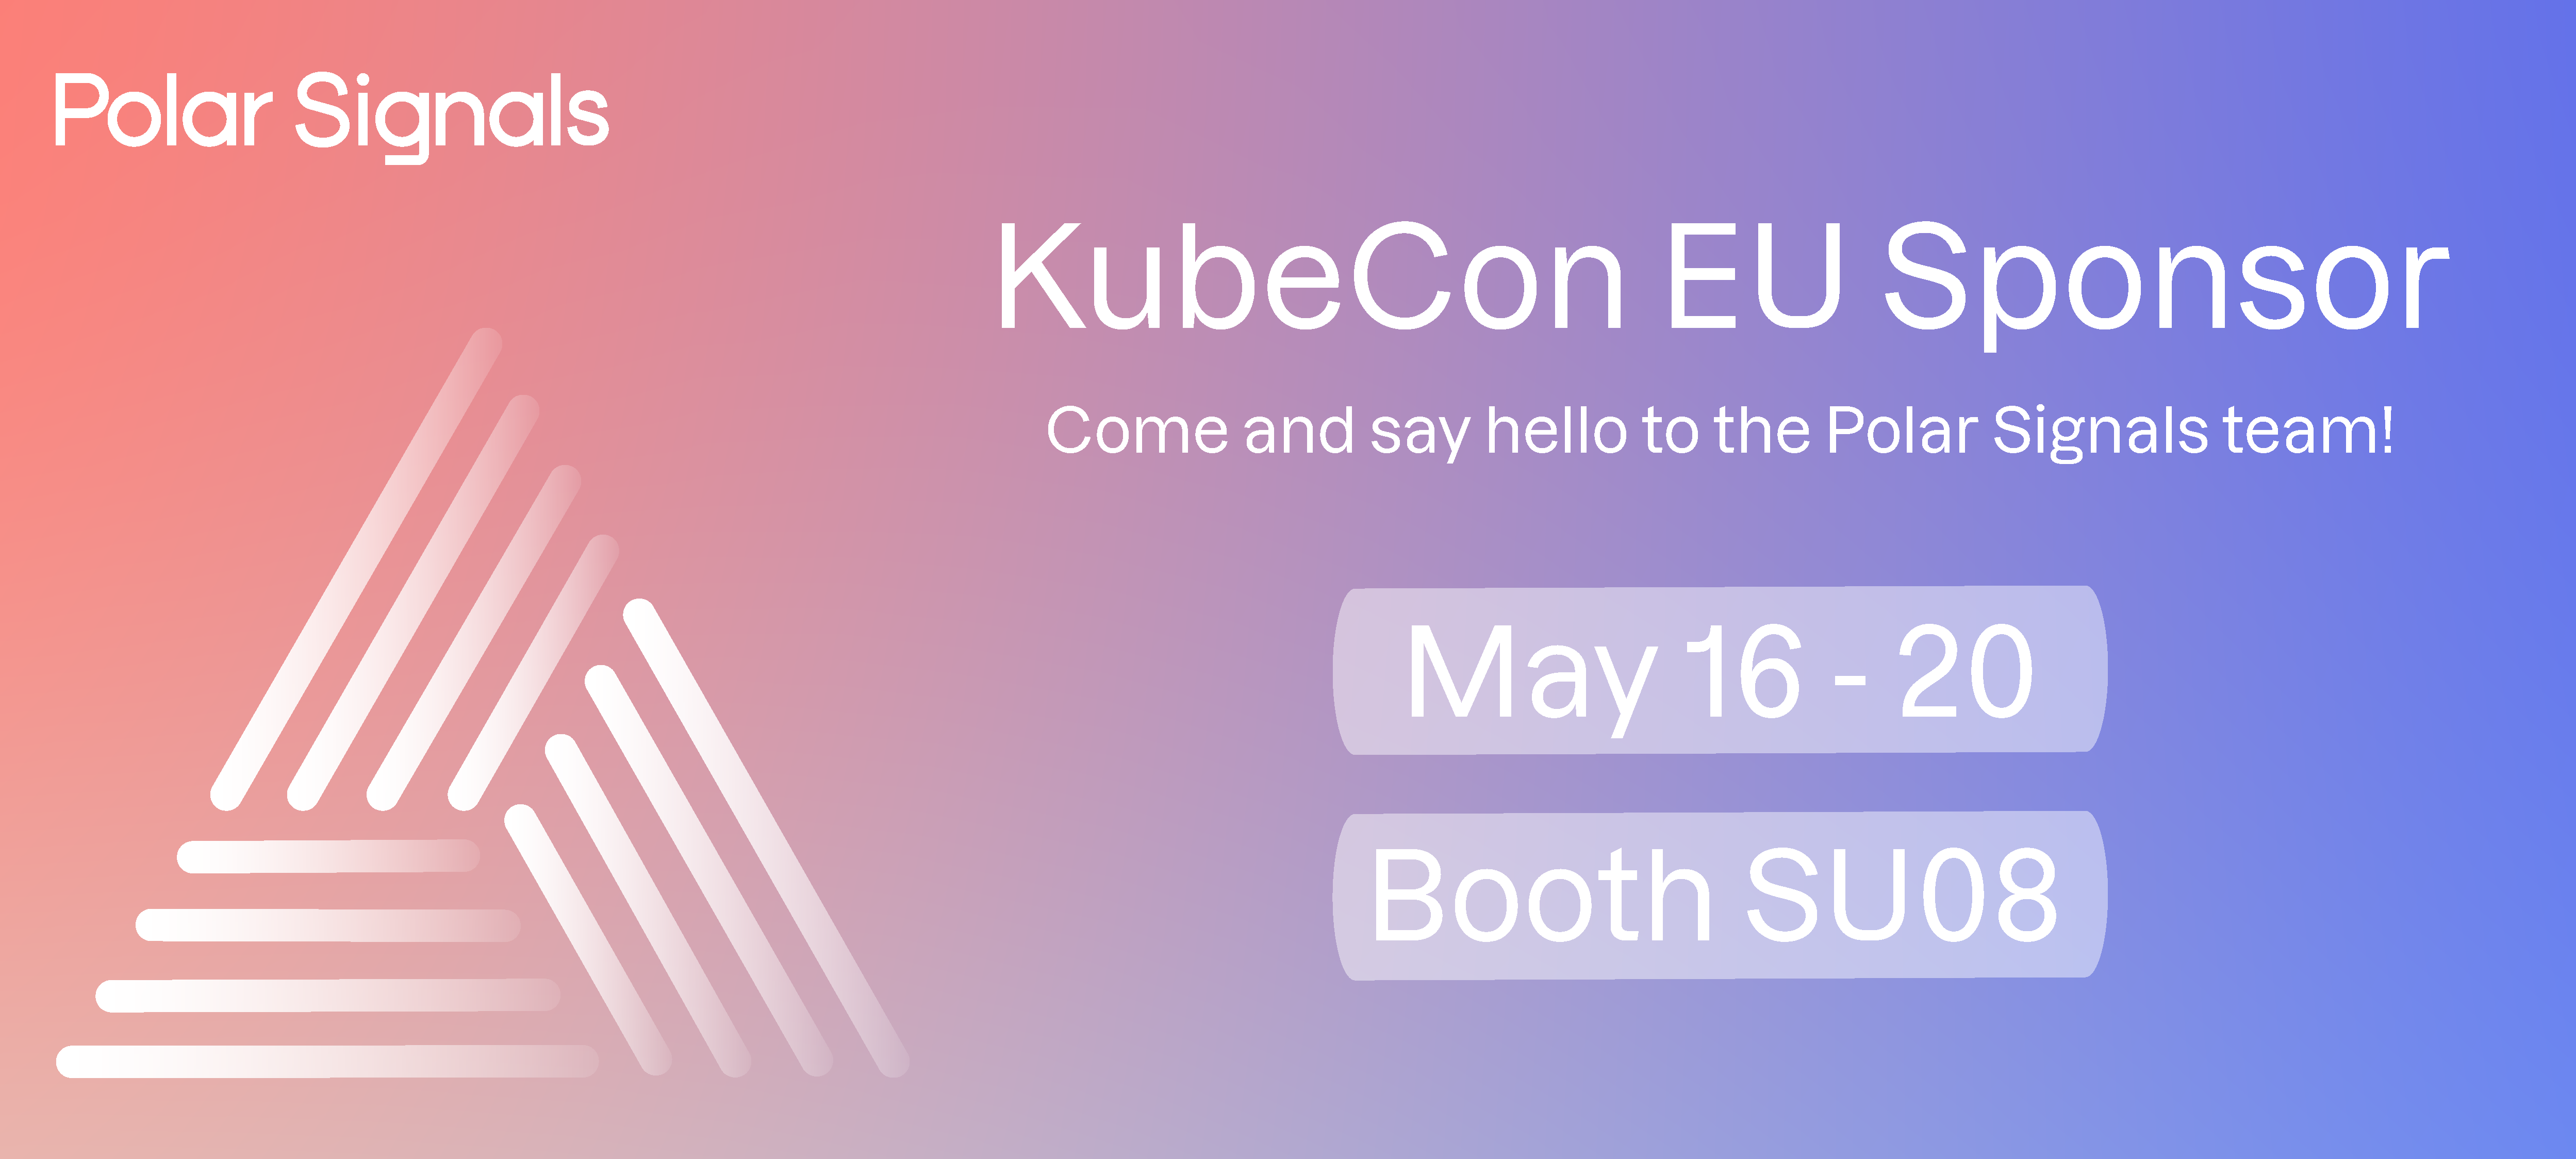 KubeCon Sponsor